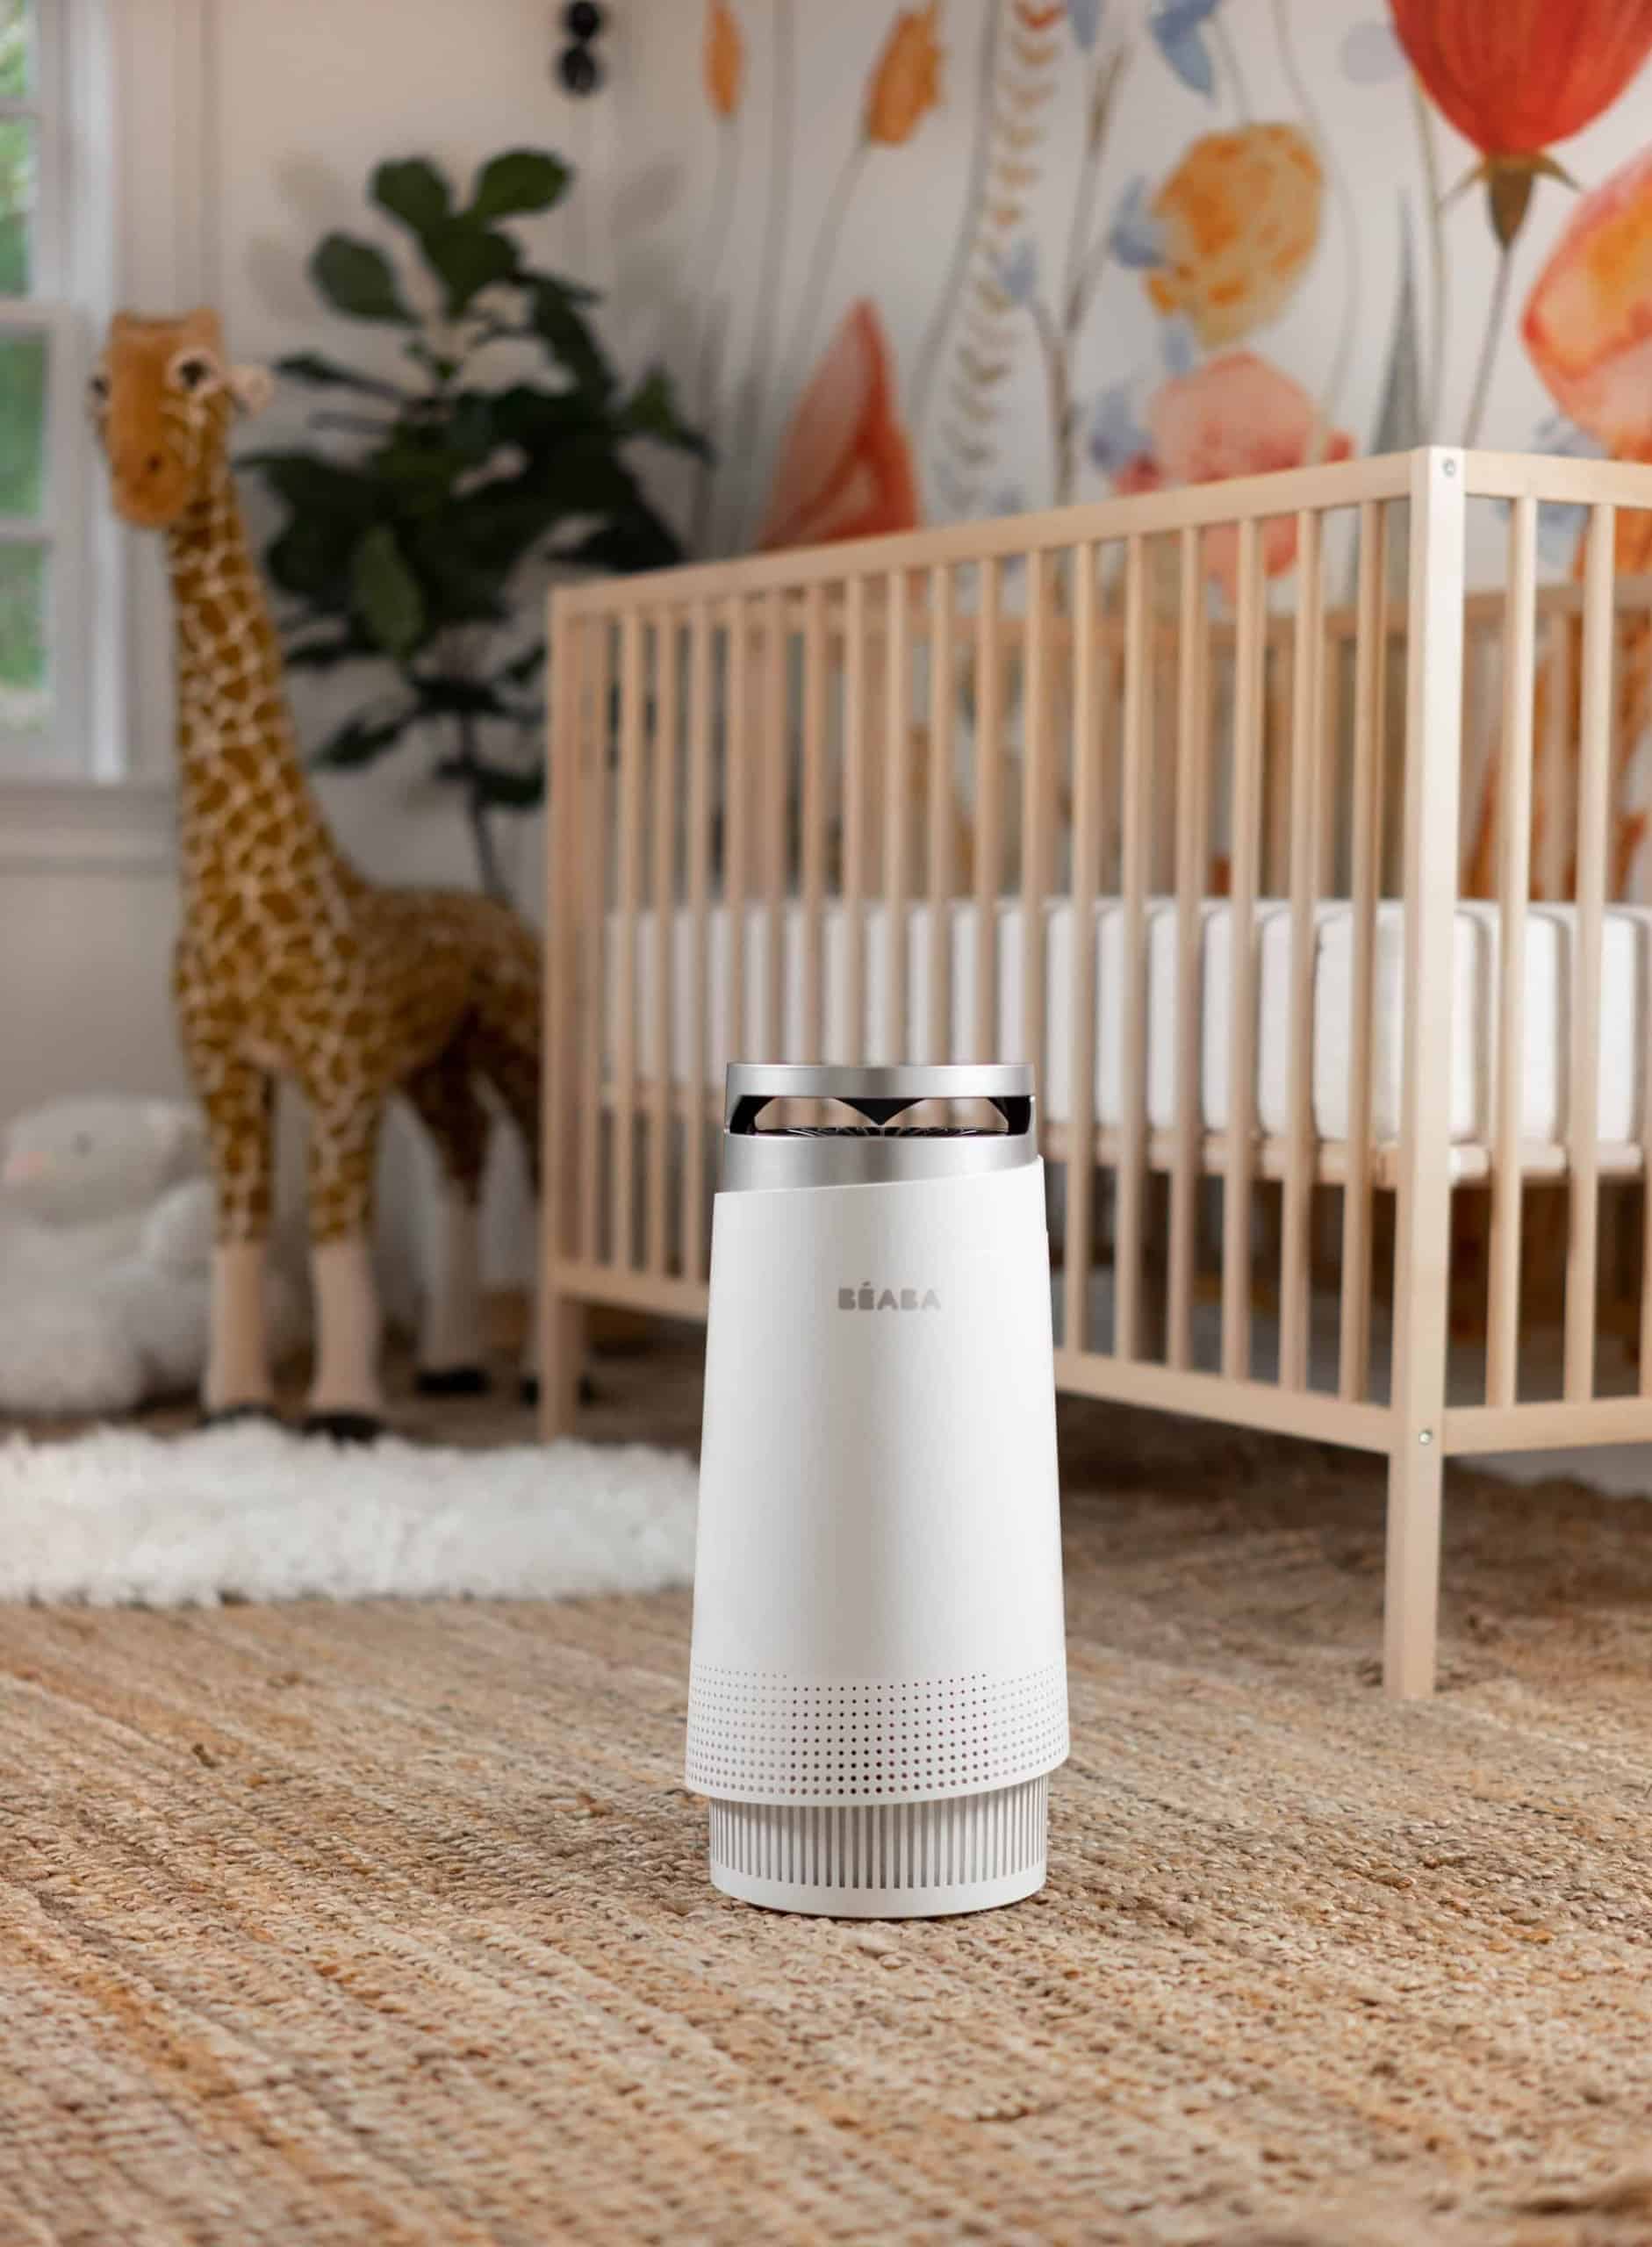 Beaba Air Purifier in baby's nursery